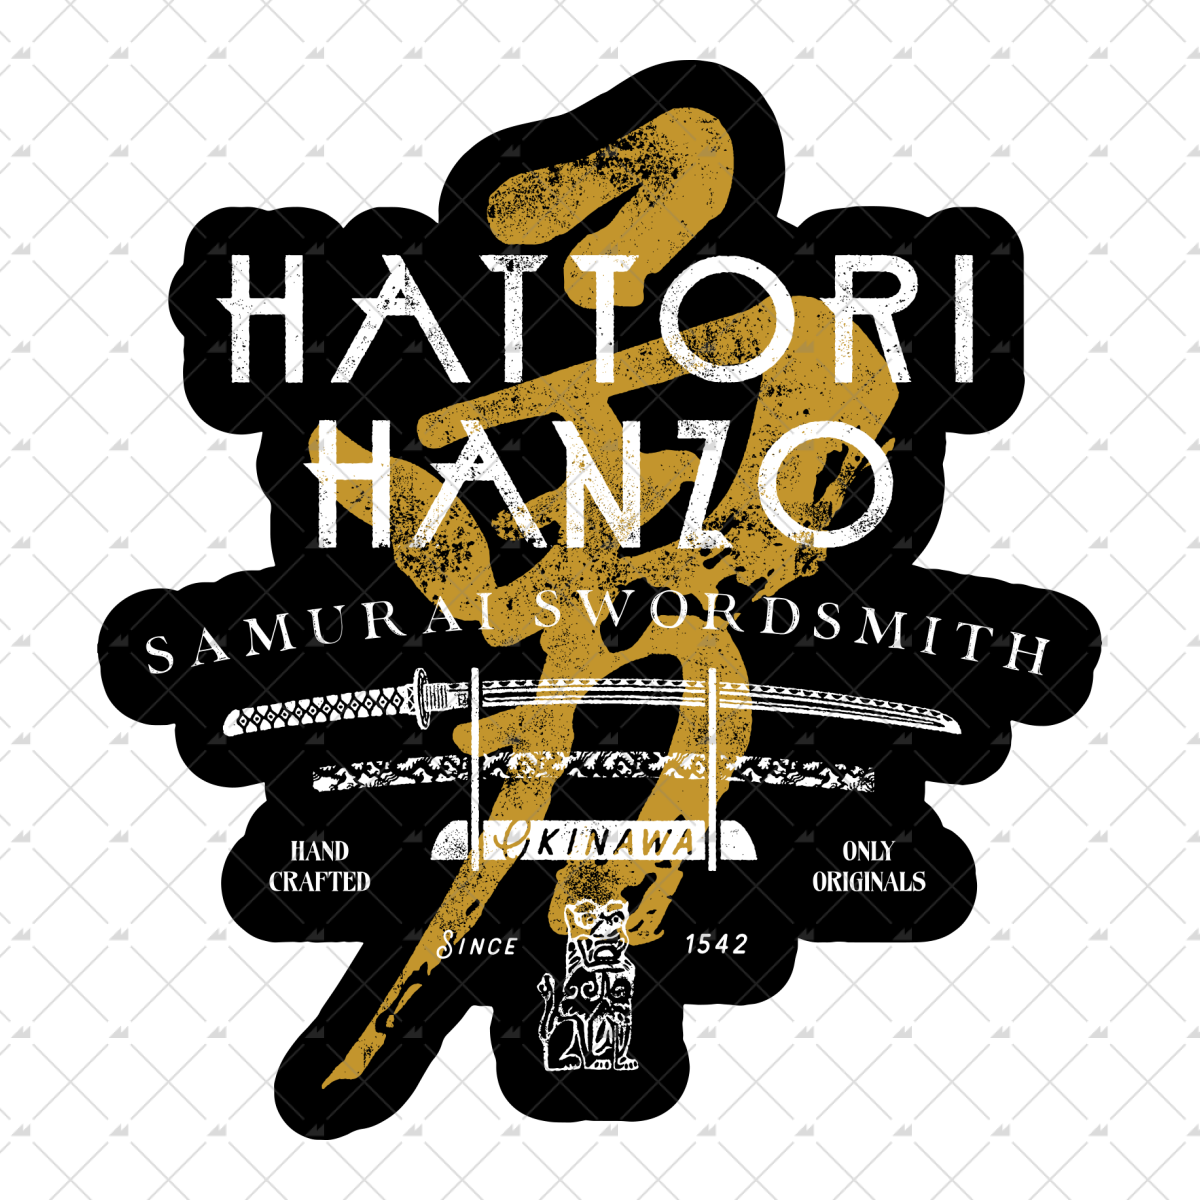 Hattori Hanzo Samurai Swordsmith - Sticker